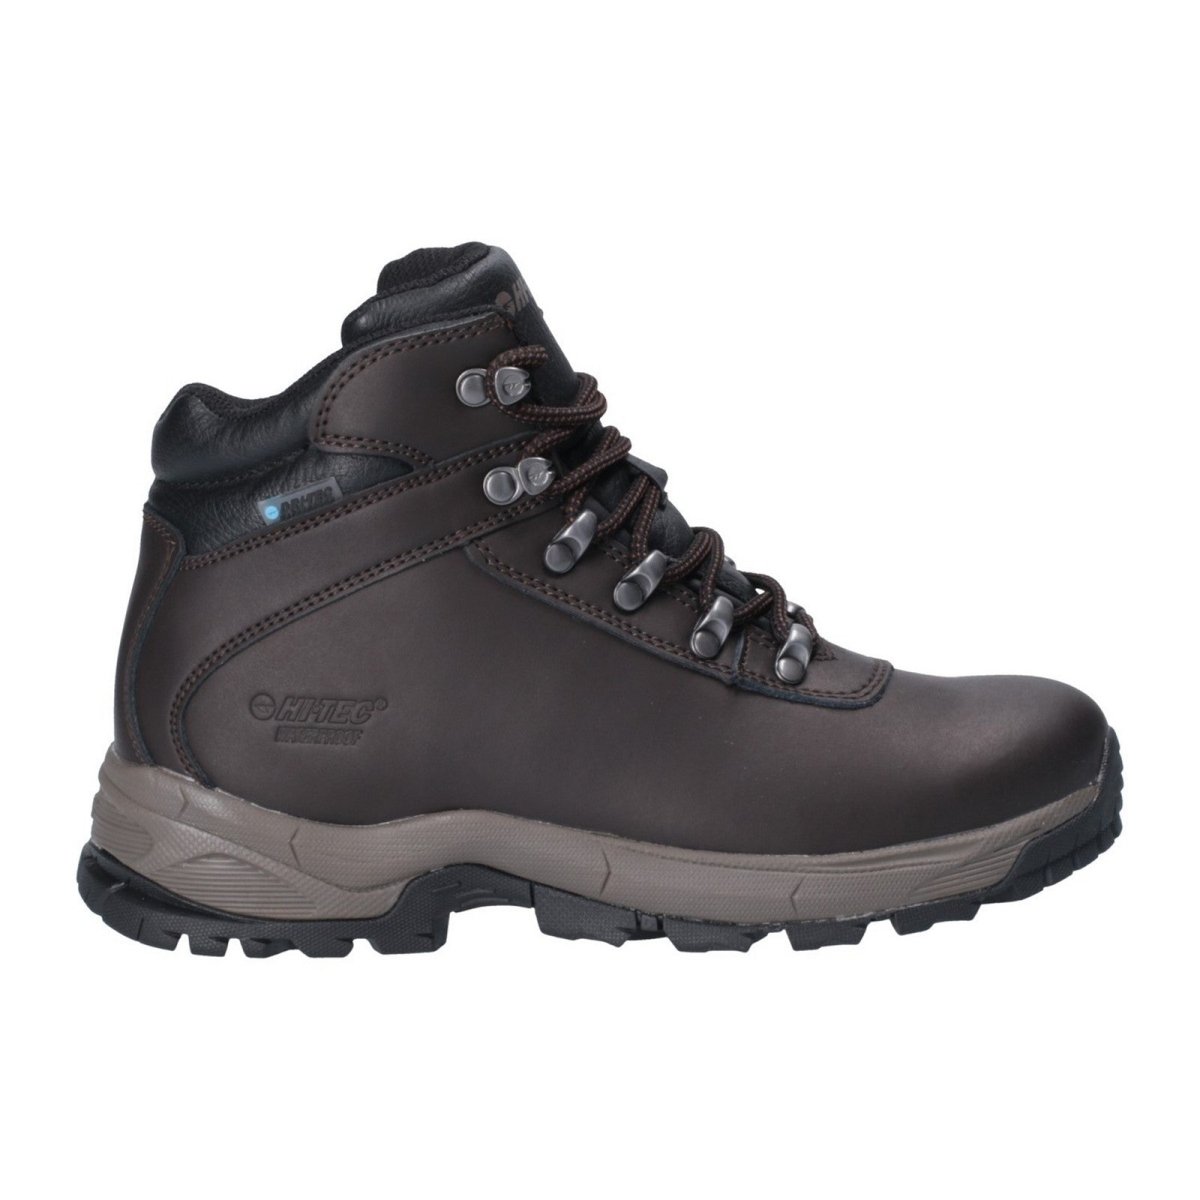 Hi-Tec Eurotrek Lite Waterproof Ladies Hiking Boots - Shoe Store Direct